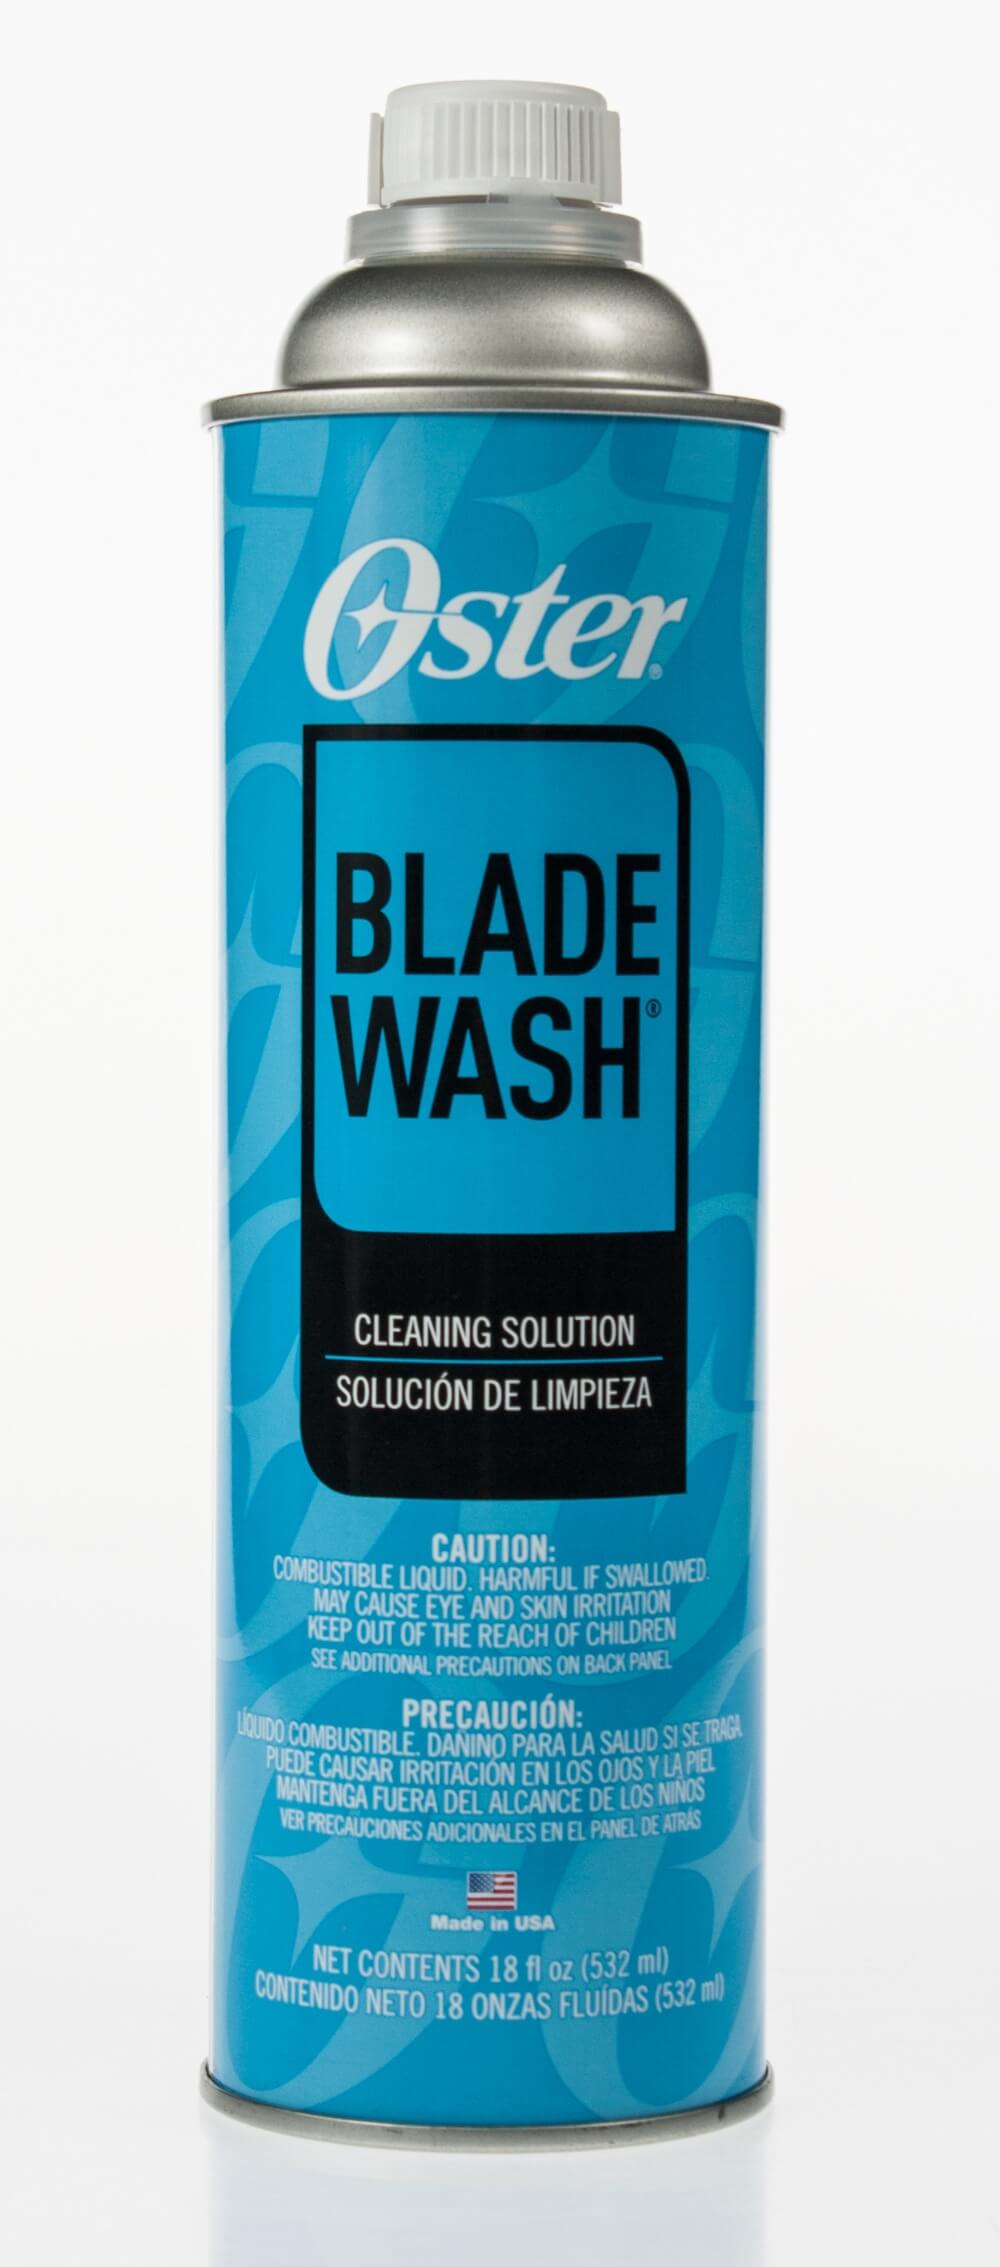 Blade Wash Oster